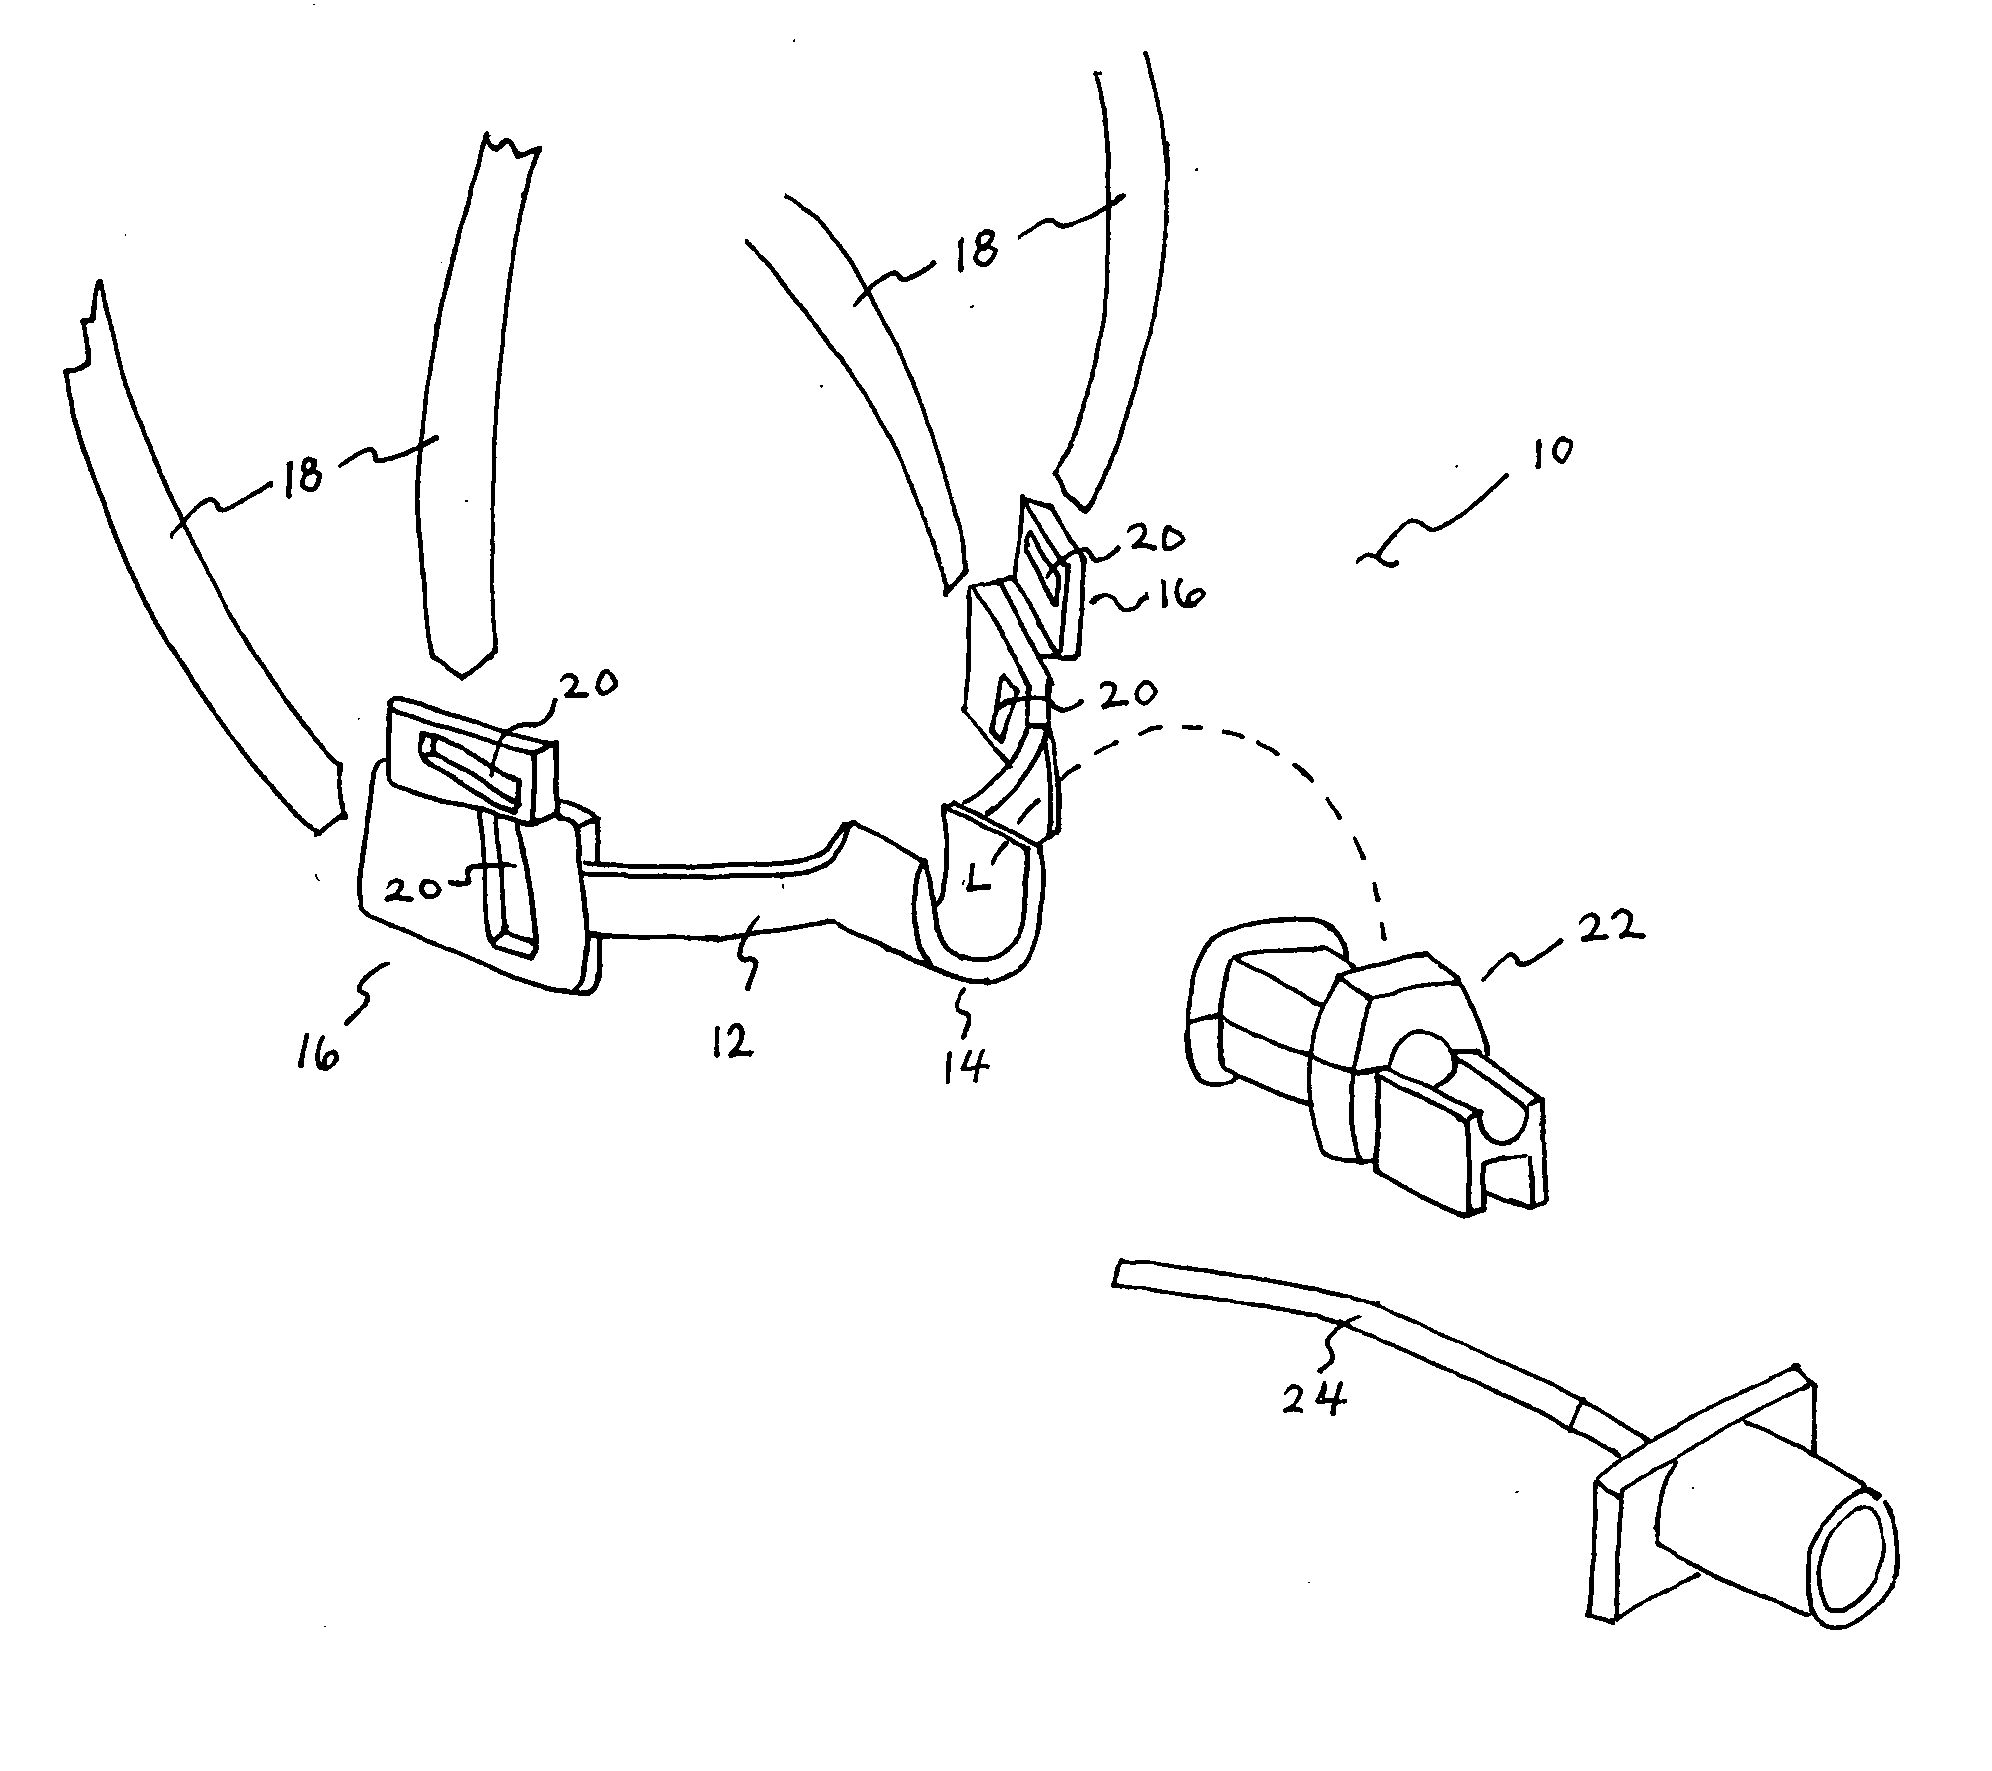 Endotracheal tube holder with an adjacent feeding tube holder for neo-natal use